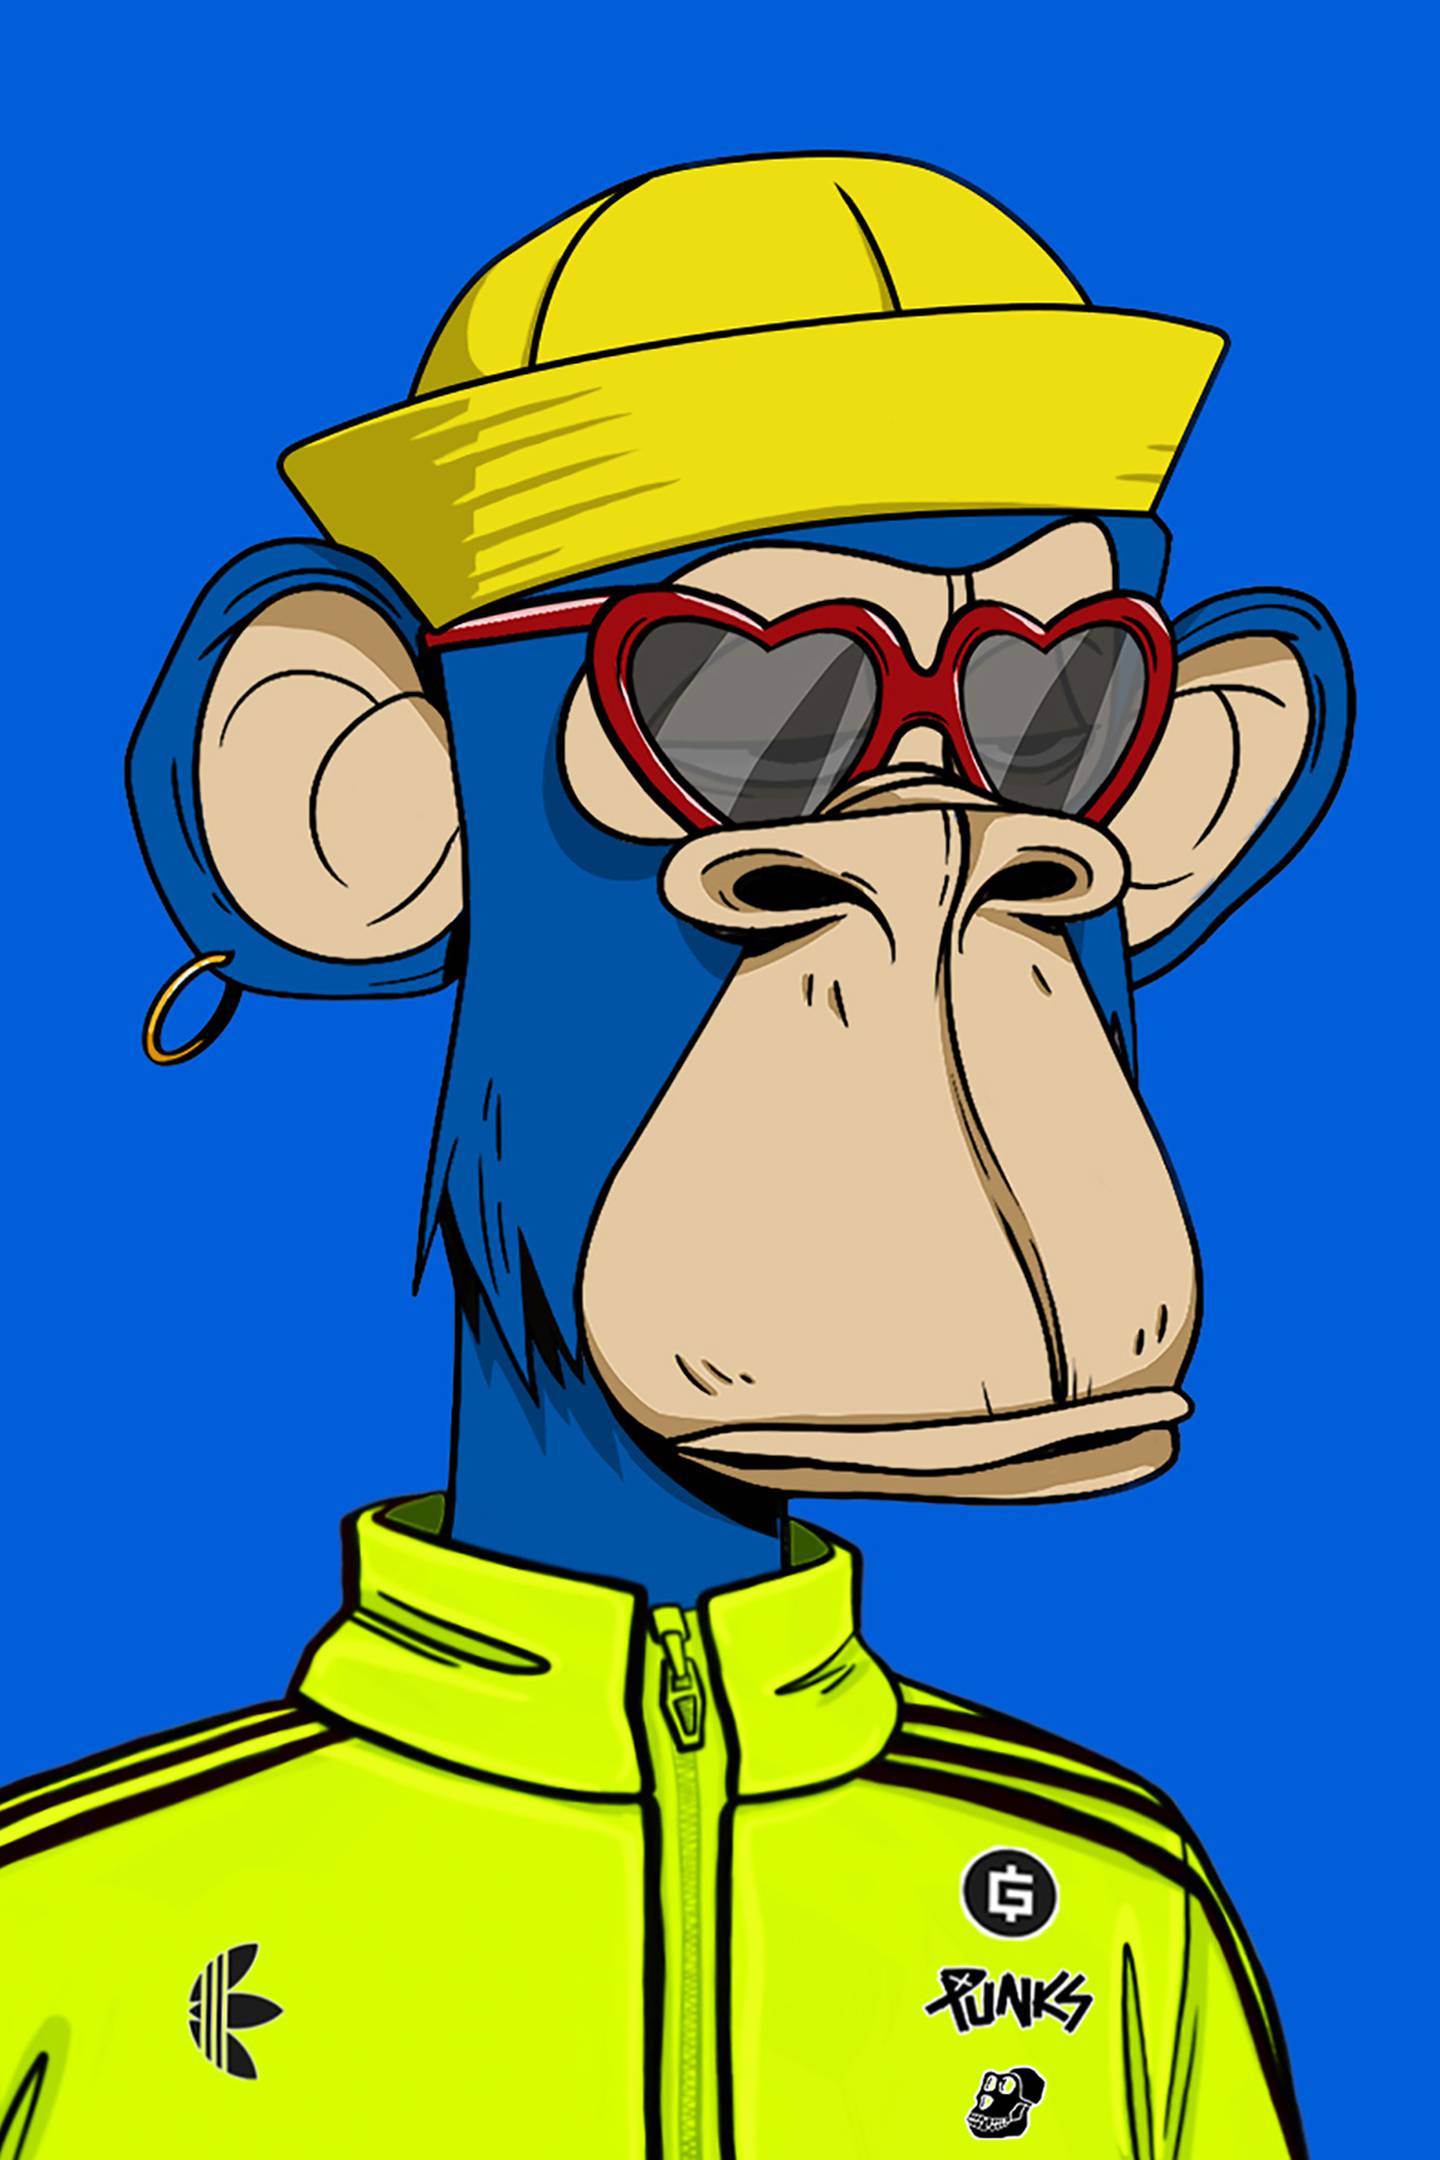 A blue-furred cartoon ape wears heart-shaped sunglasses and a neon yellow Adidas track jacket.